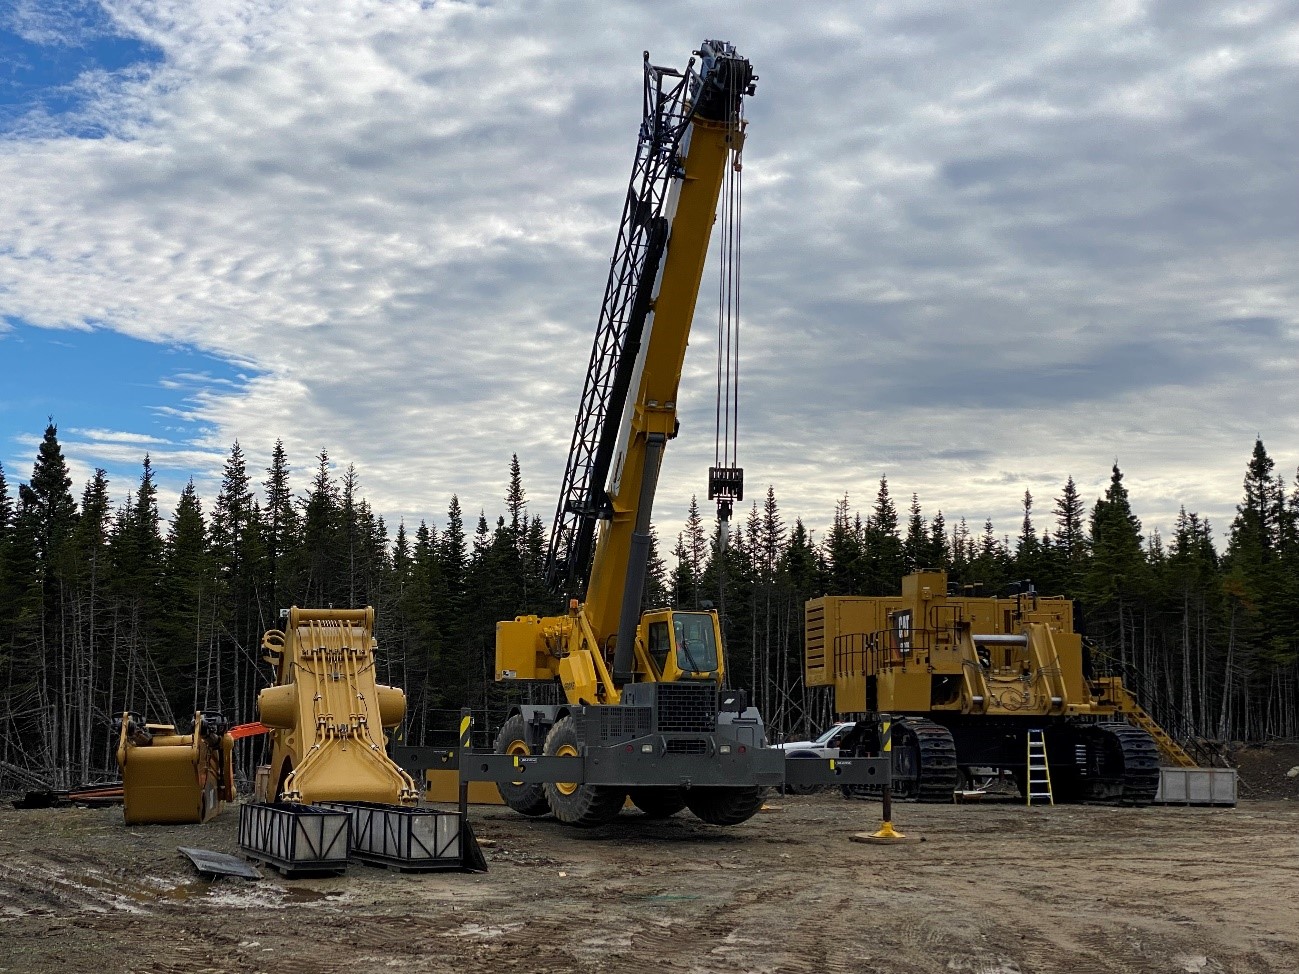 Caterpillar 6020 shovel (top) and two Caterpillar 777 100t mine trucks undergoing on-site preparation (bottom)